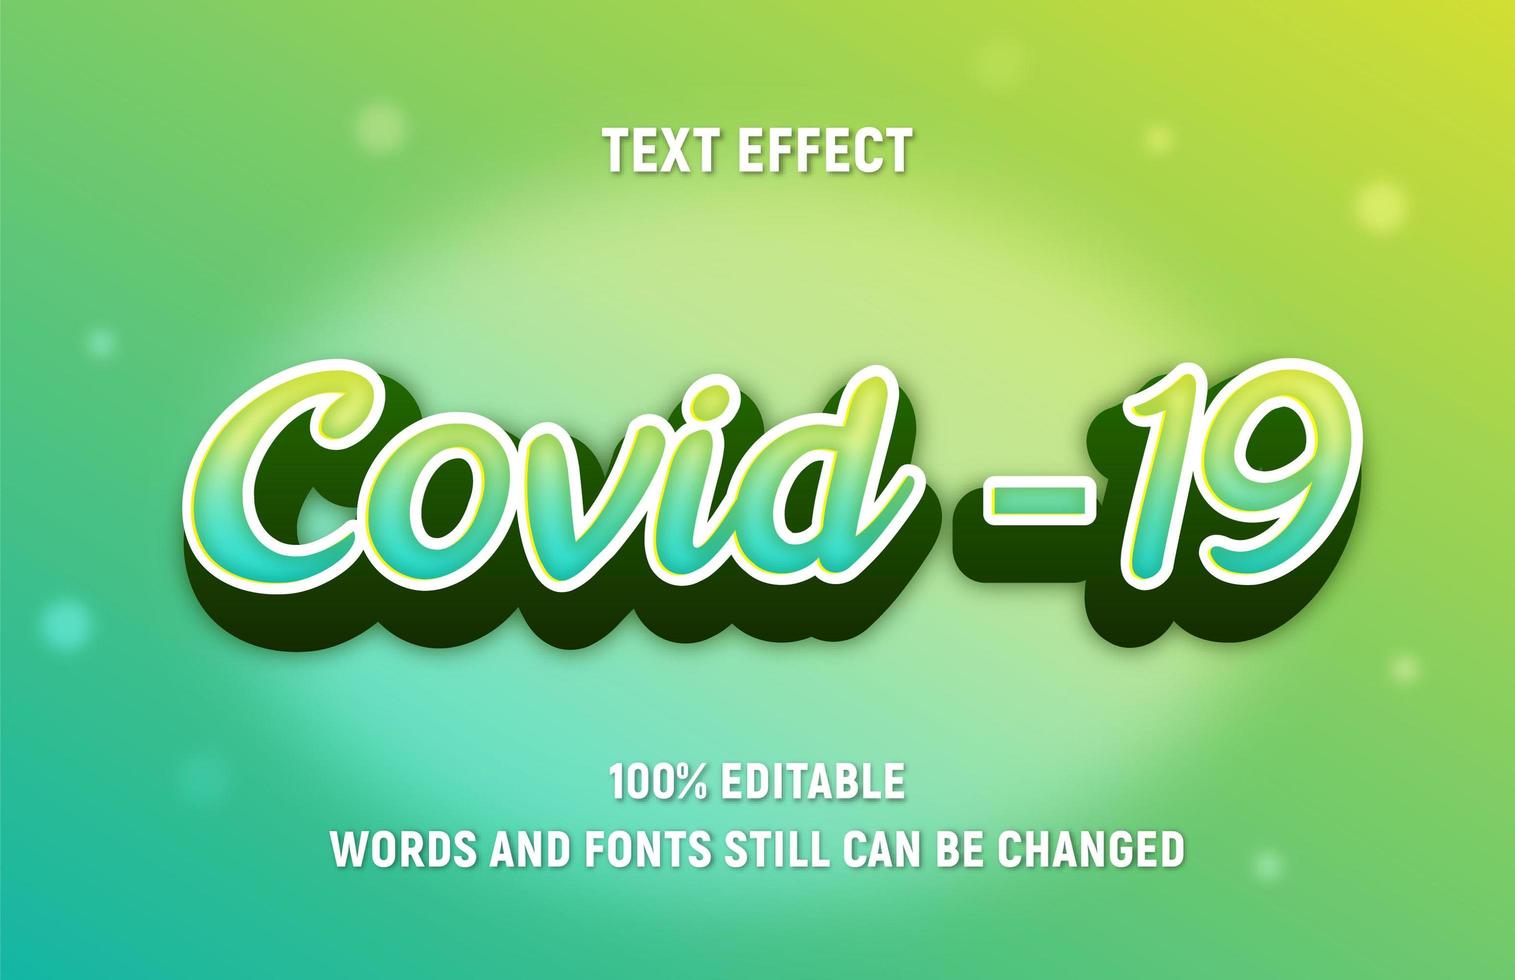 Editable Green, Yellow Text COVID-19 vector